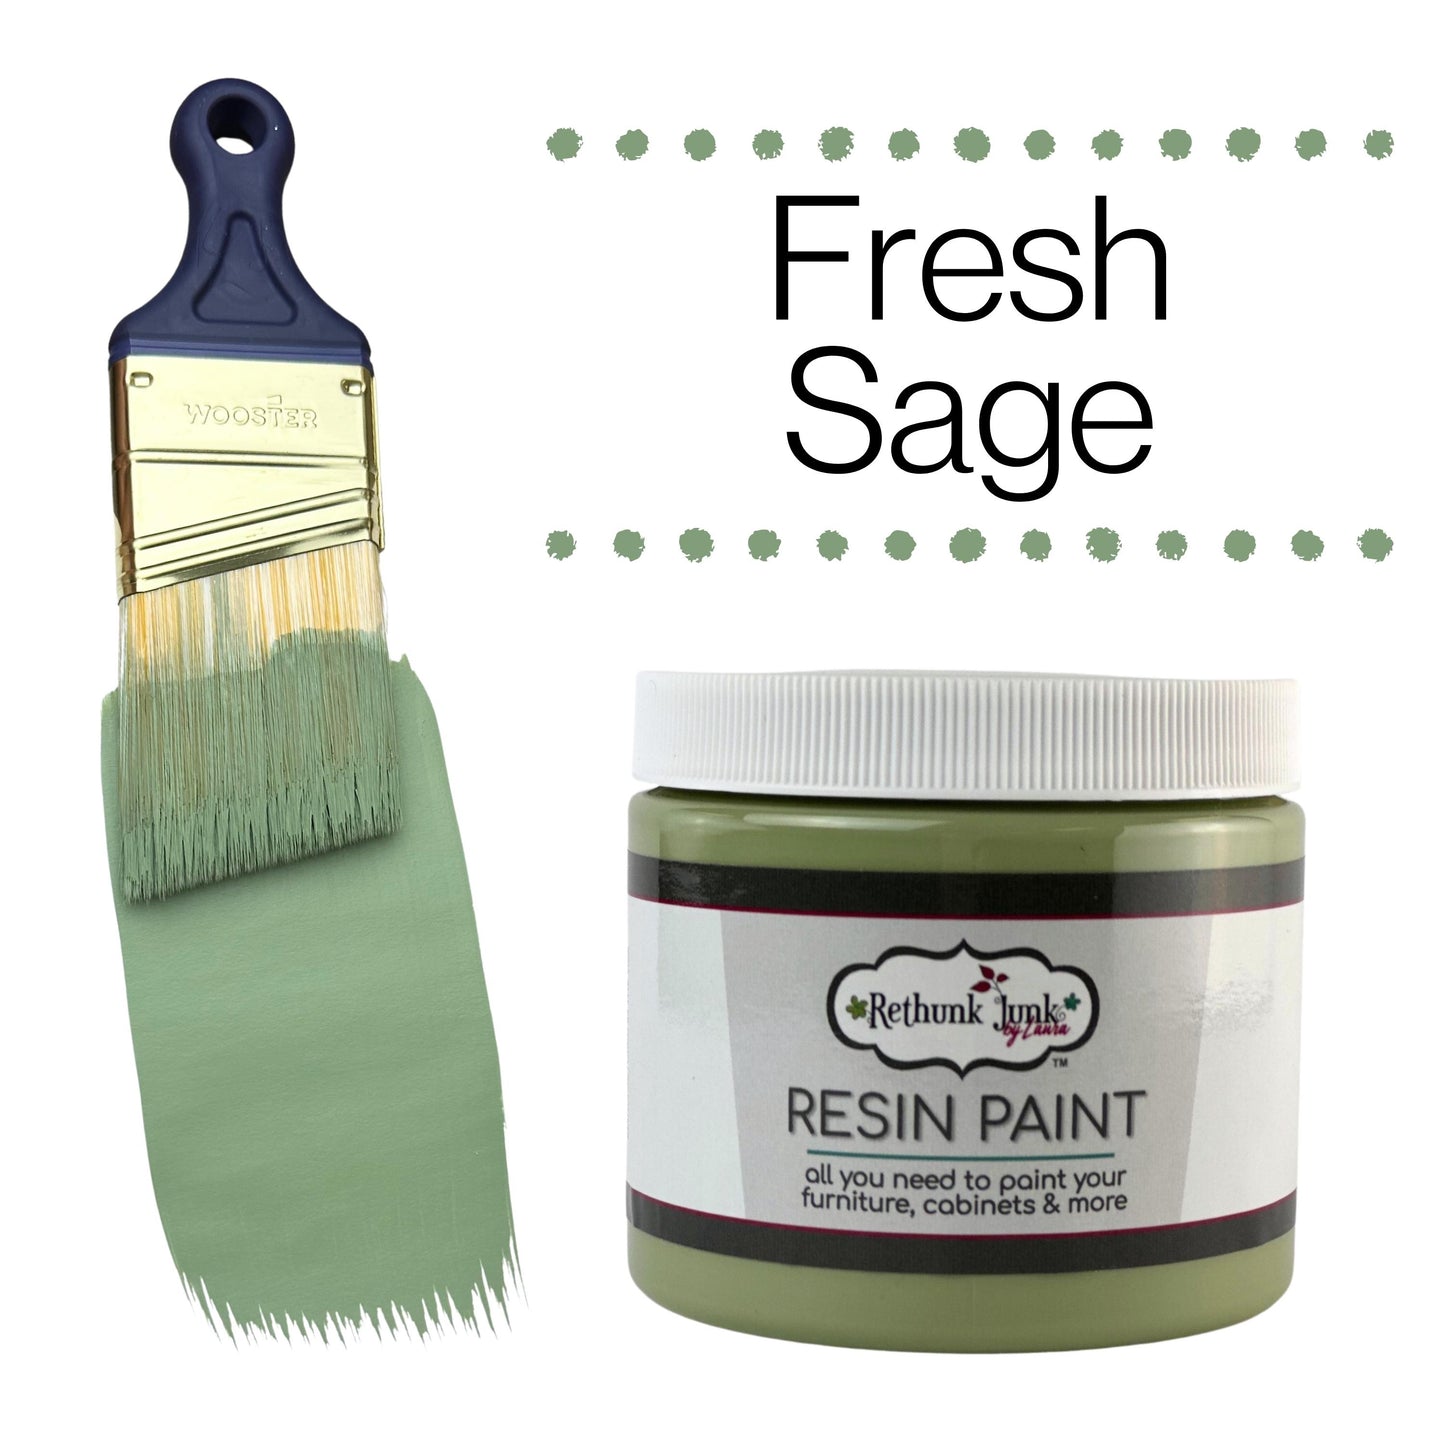 Rethunk Junk Resin Paint in Fresh Sage